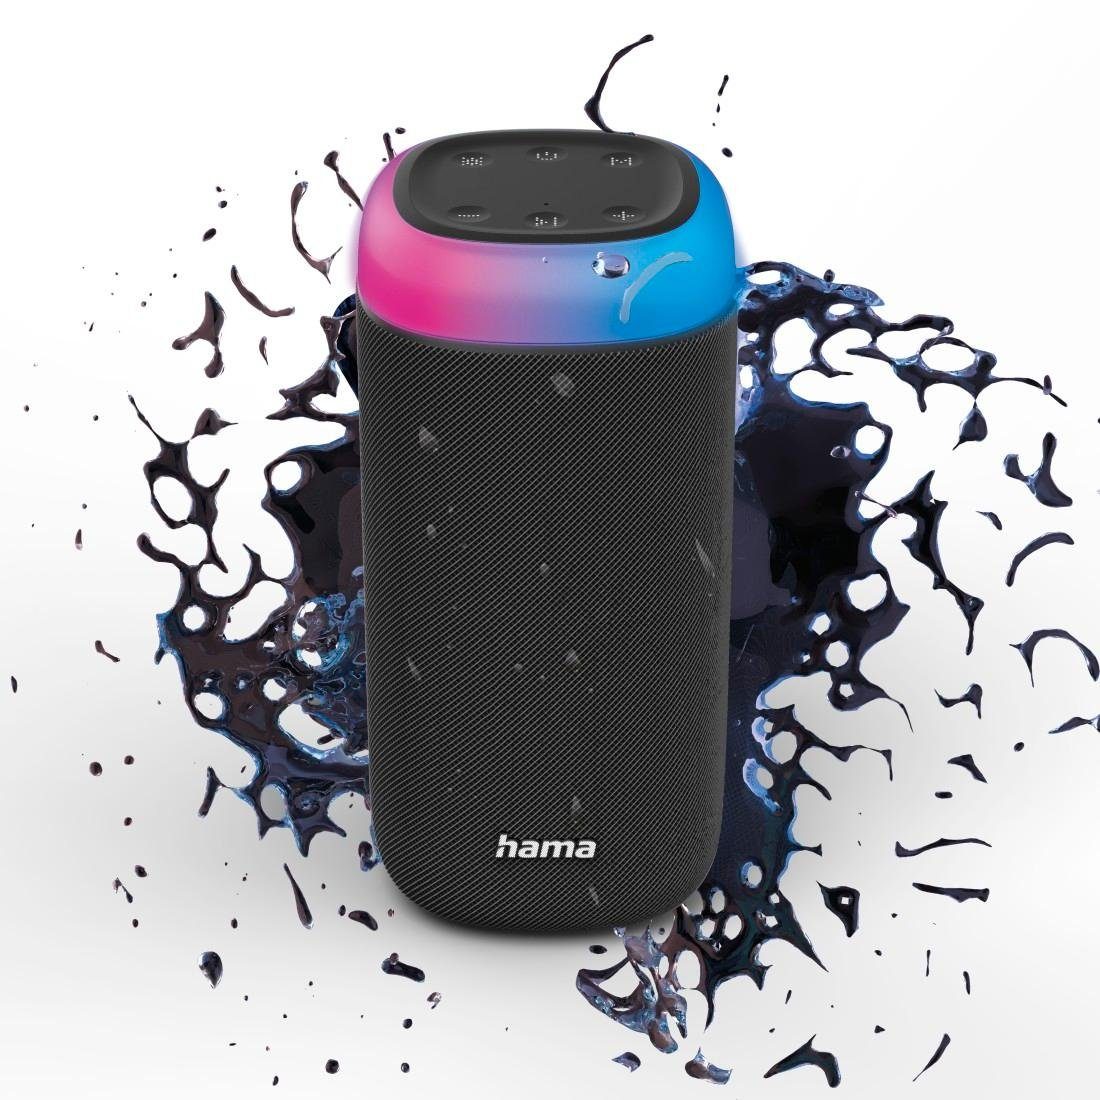 Hama Bluetooth Box Shine 2.0 LED Xtra Bass 360ᵒ Sound spritzwassergeschützt Bluetooth-Lautsprecher (Freisprechanlage,Xtra Bass,360ᵒ Sound) schwarz